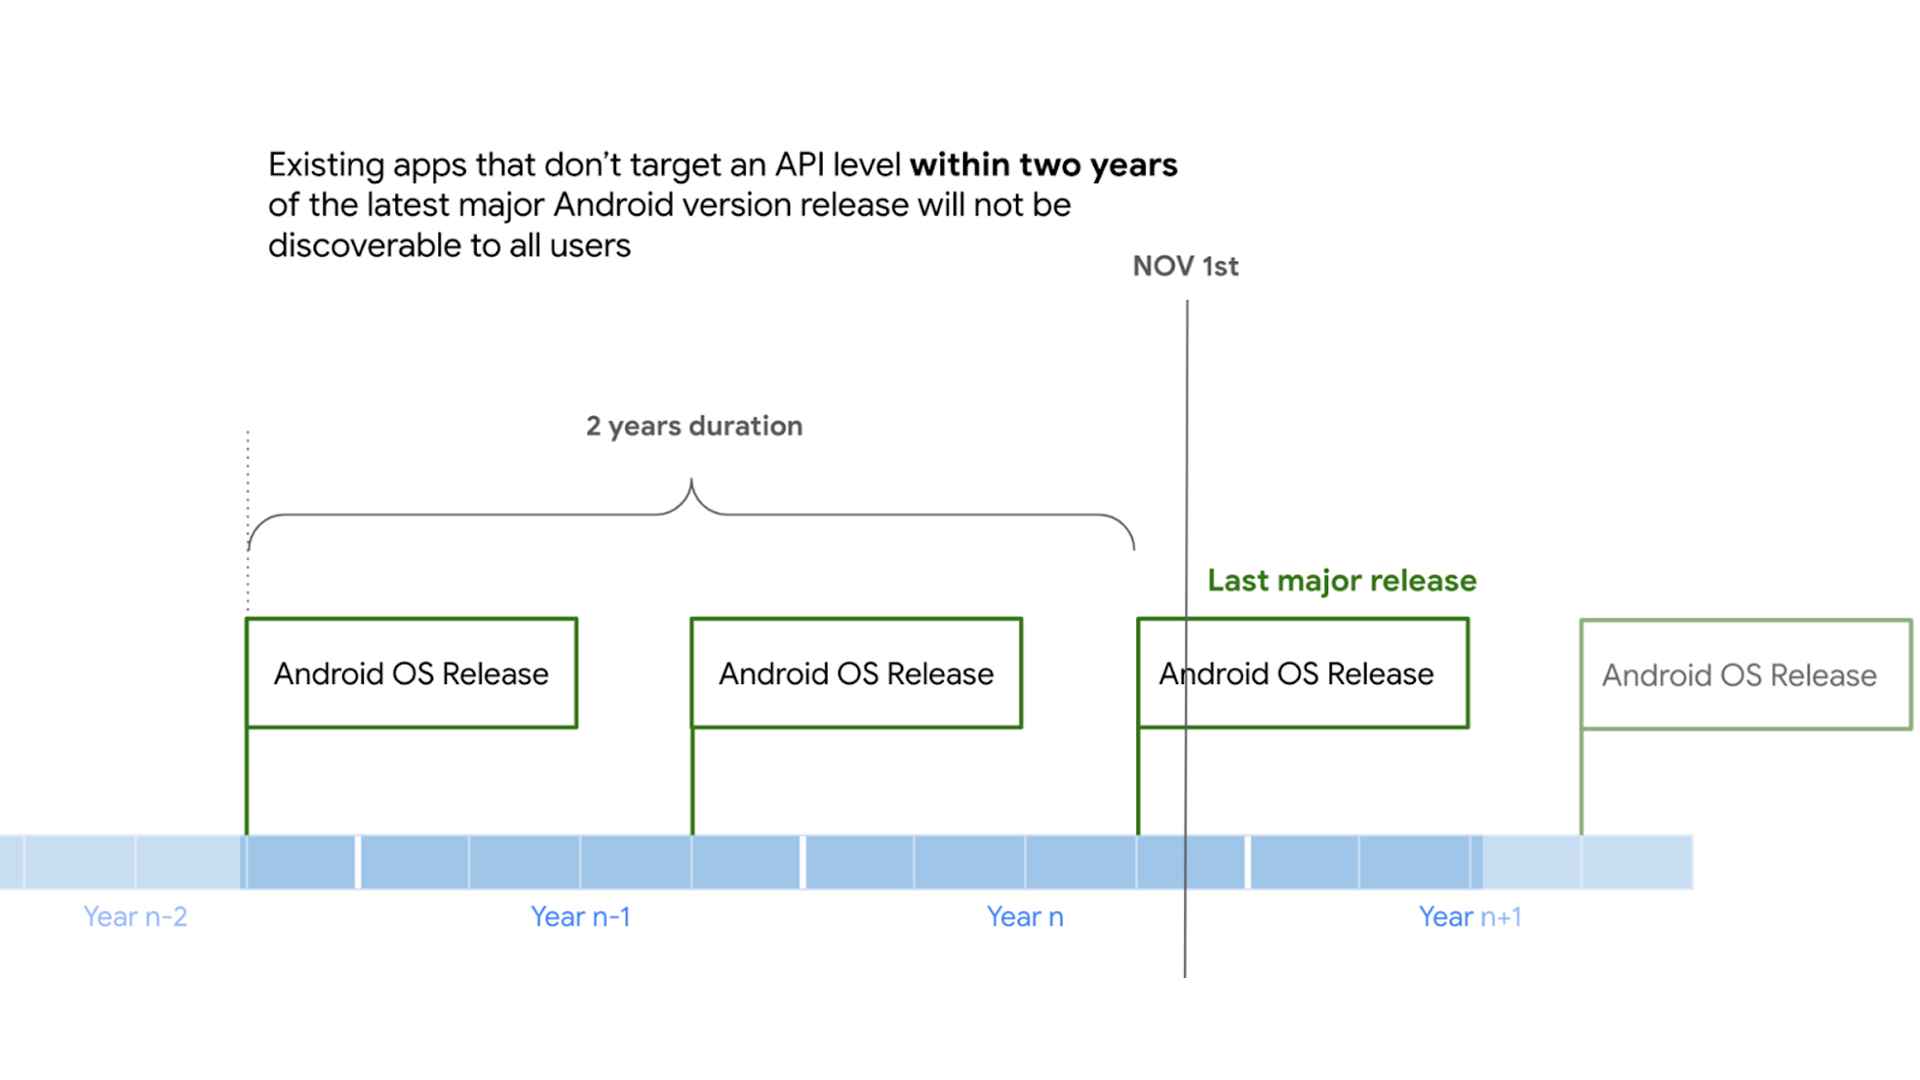 Timeline of the target API level window